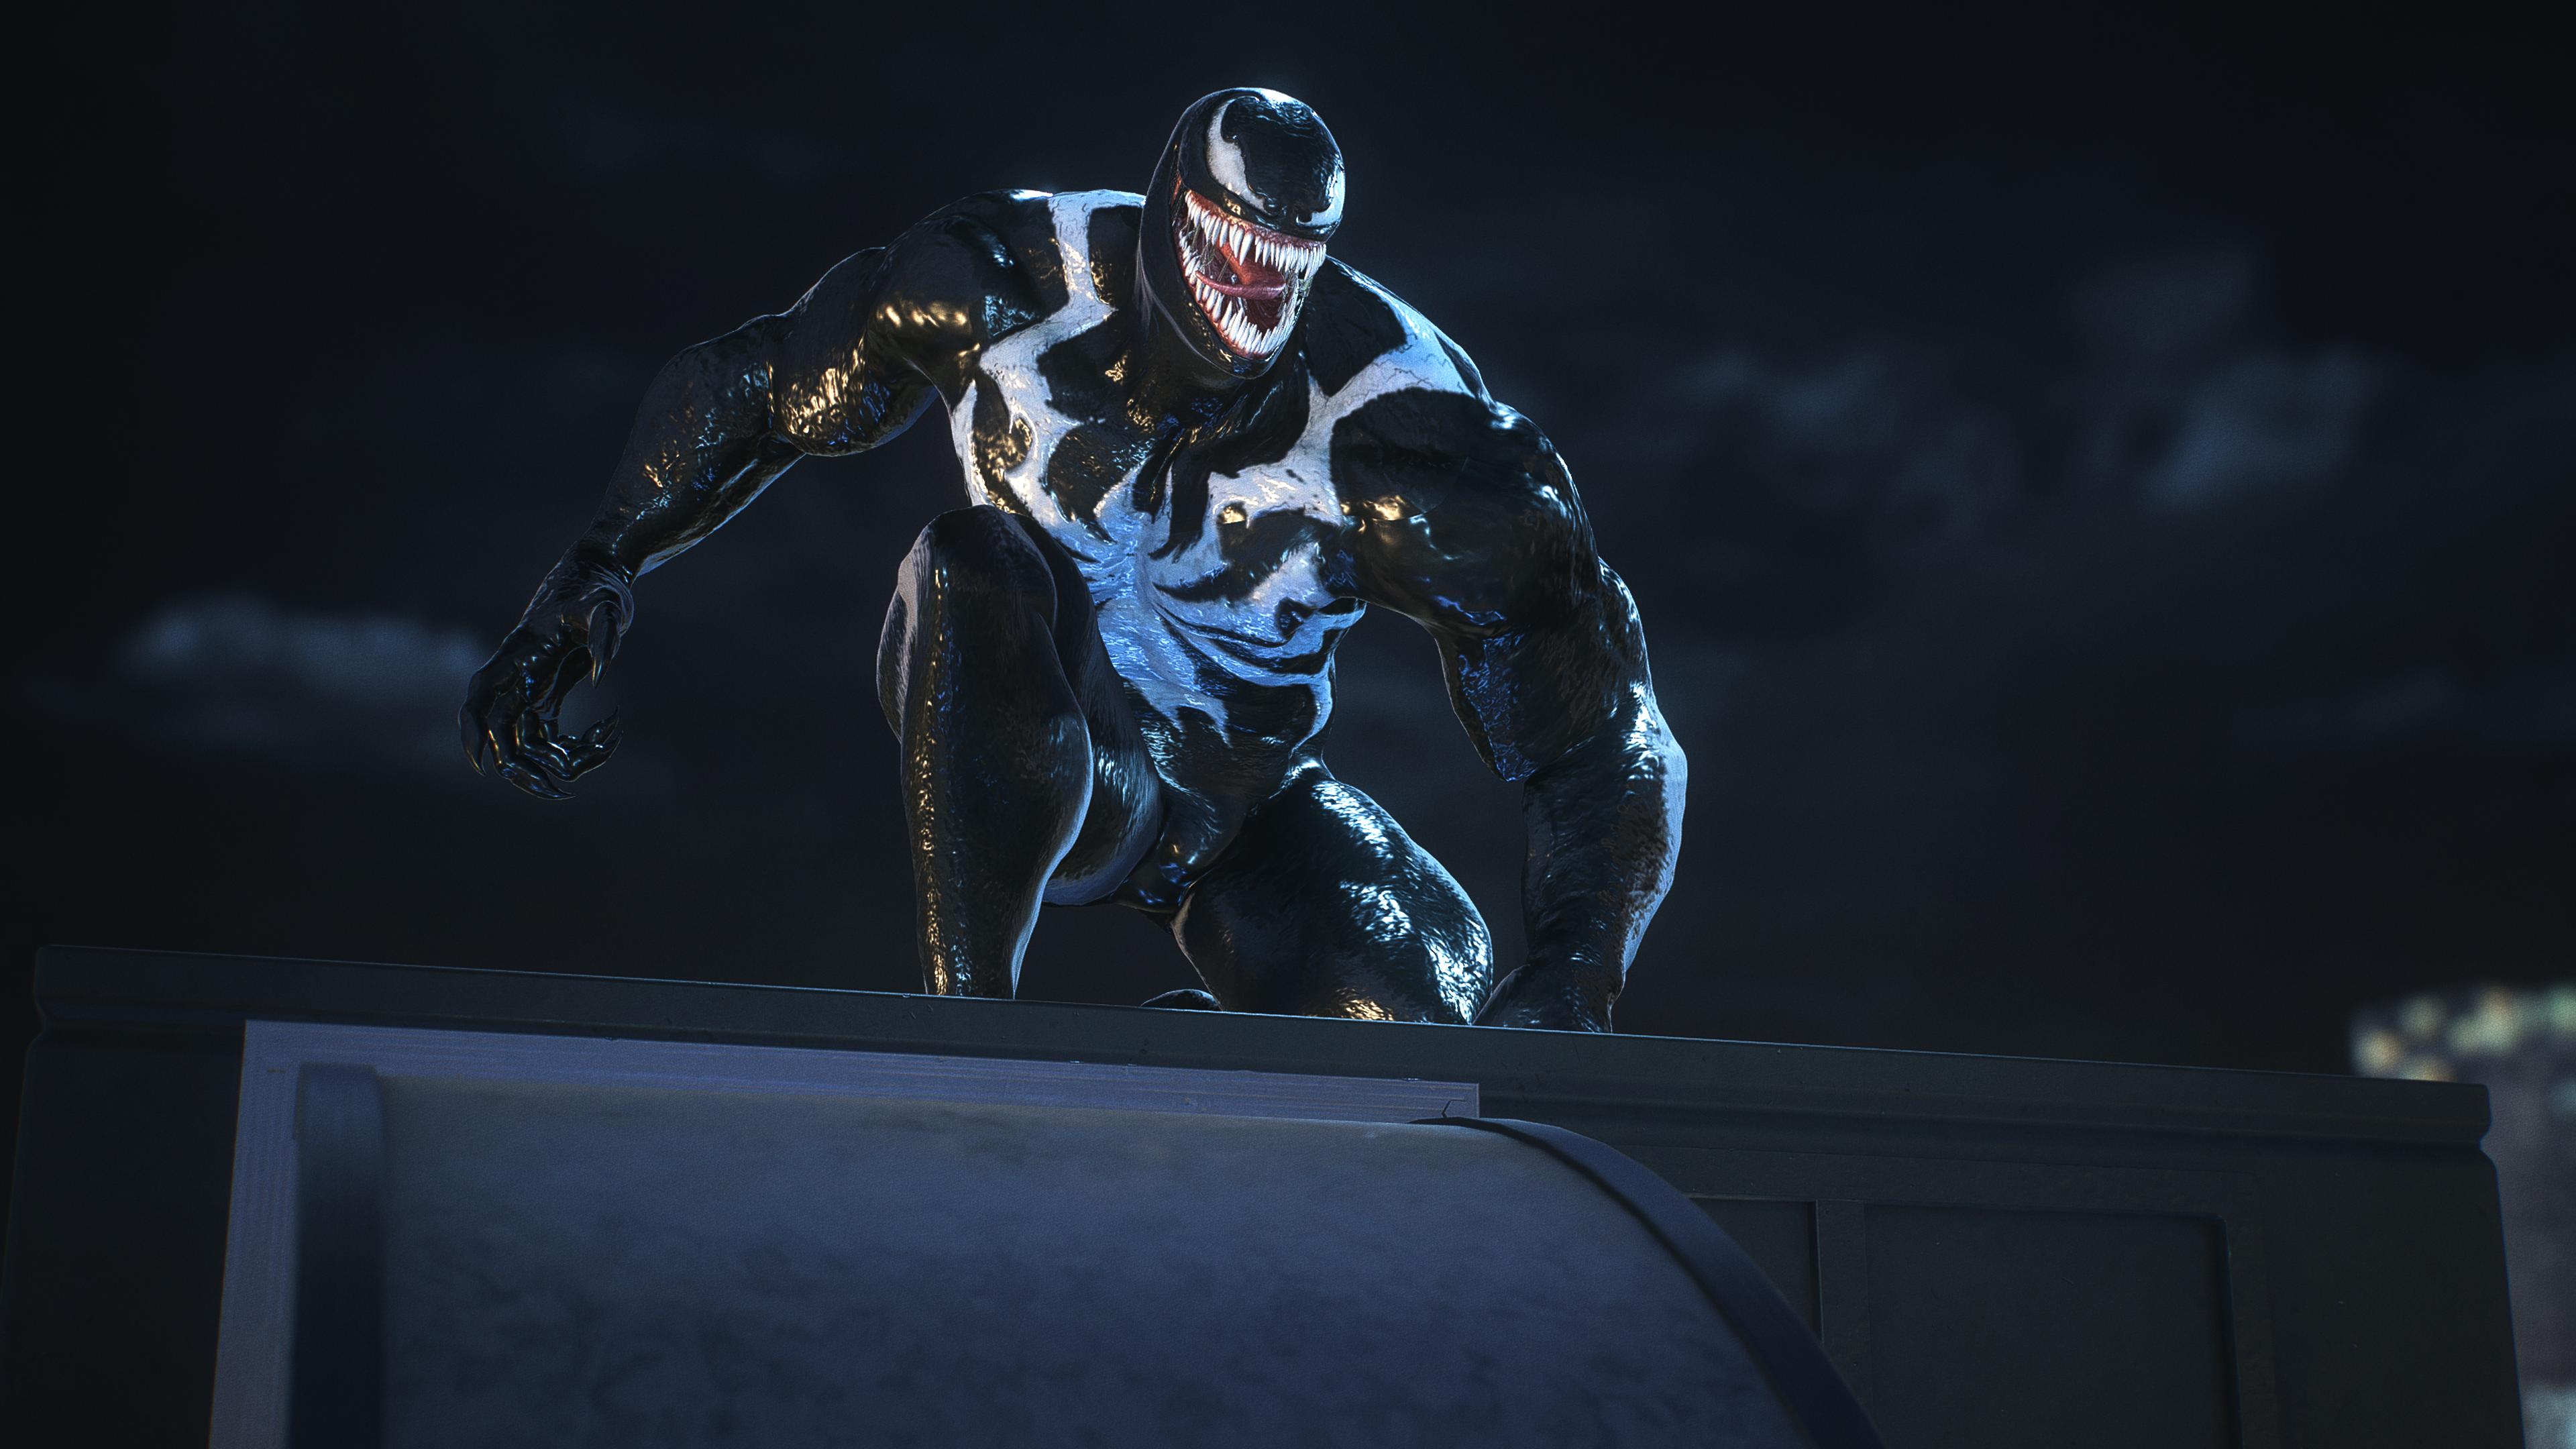 Spider-Man 2 PS5 Demo Won't Happen, Says Developer - Comic Book